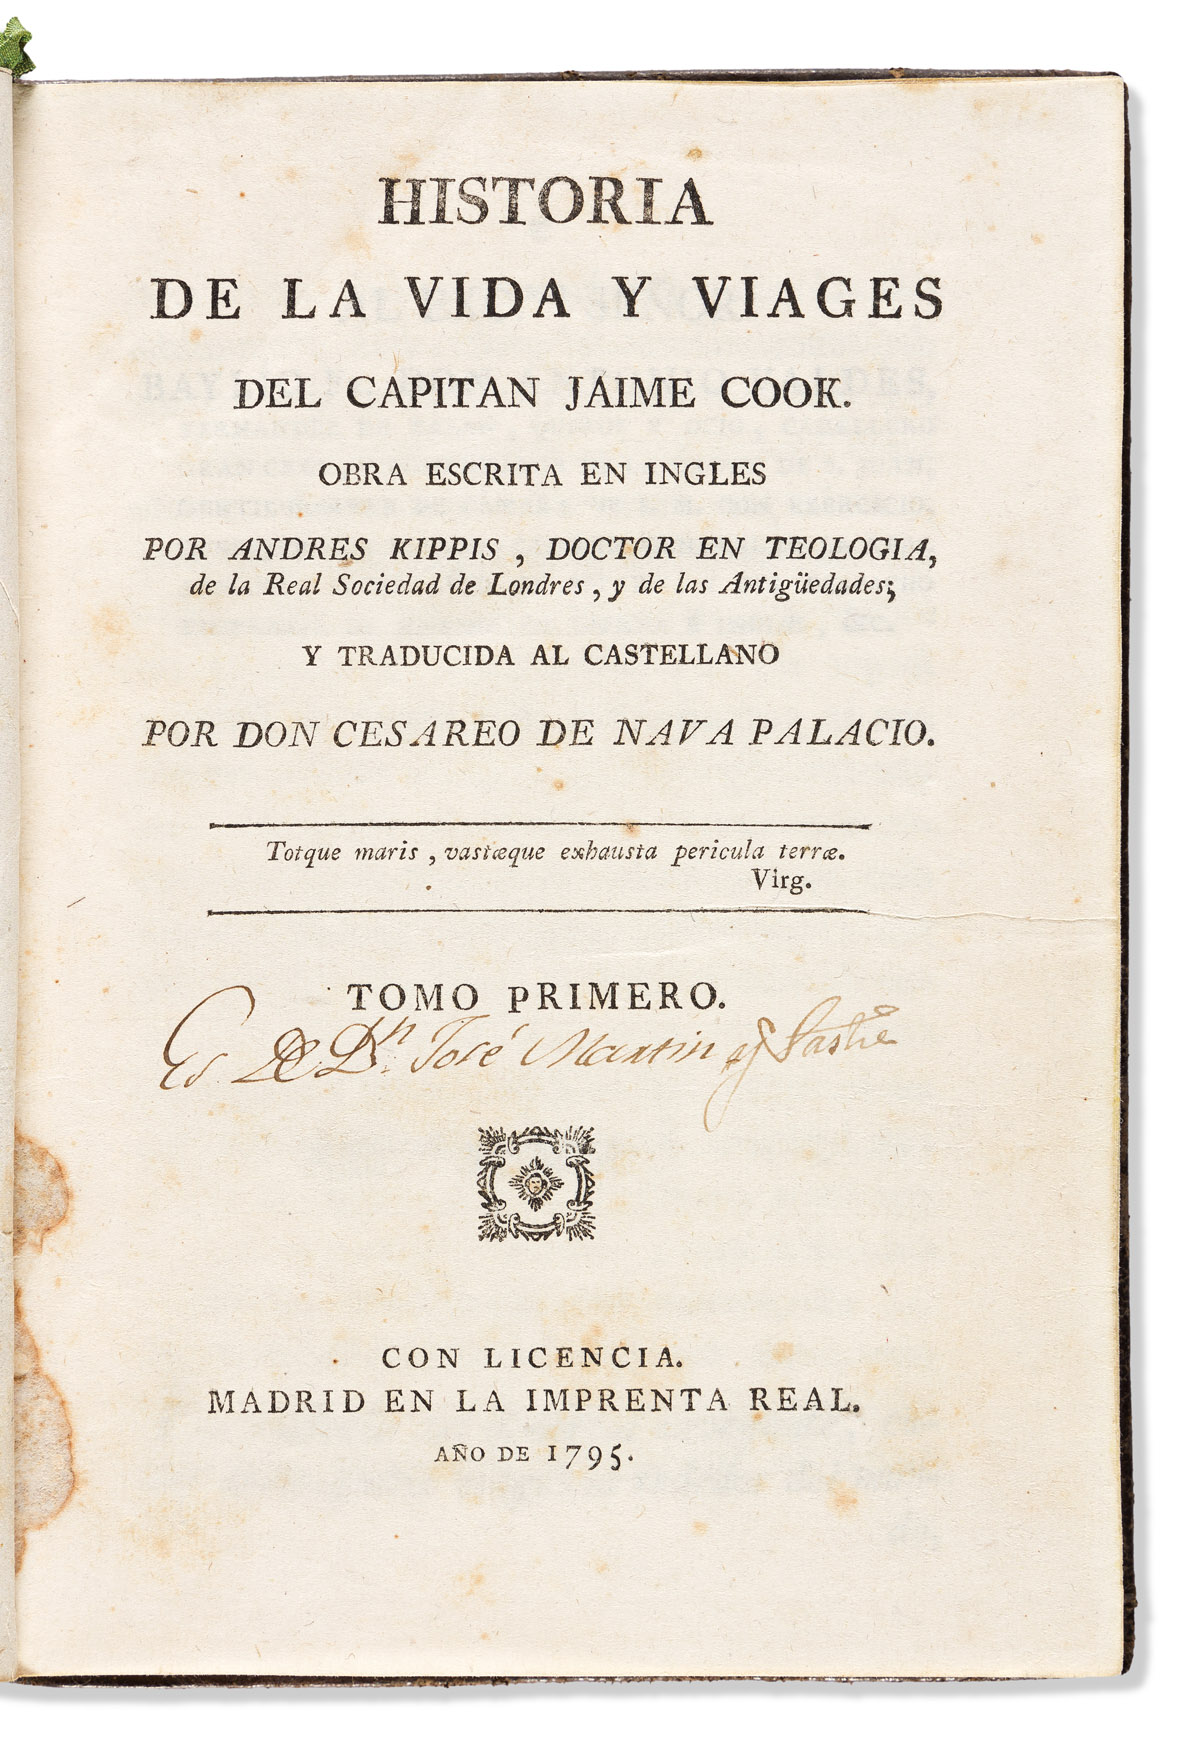 Kippis, Andrew (1725-1795) trans. Cesareo de Nava Palacio. Historia de la Vida y Viages del Capitan Jaime Cook. Obra Escrita en Ingles.